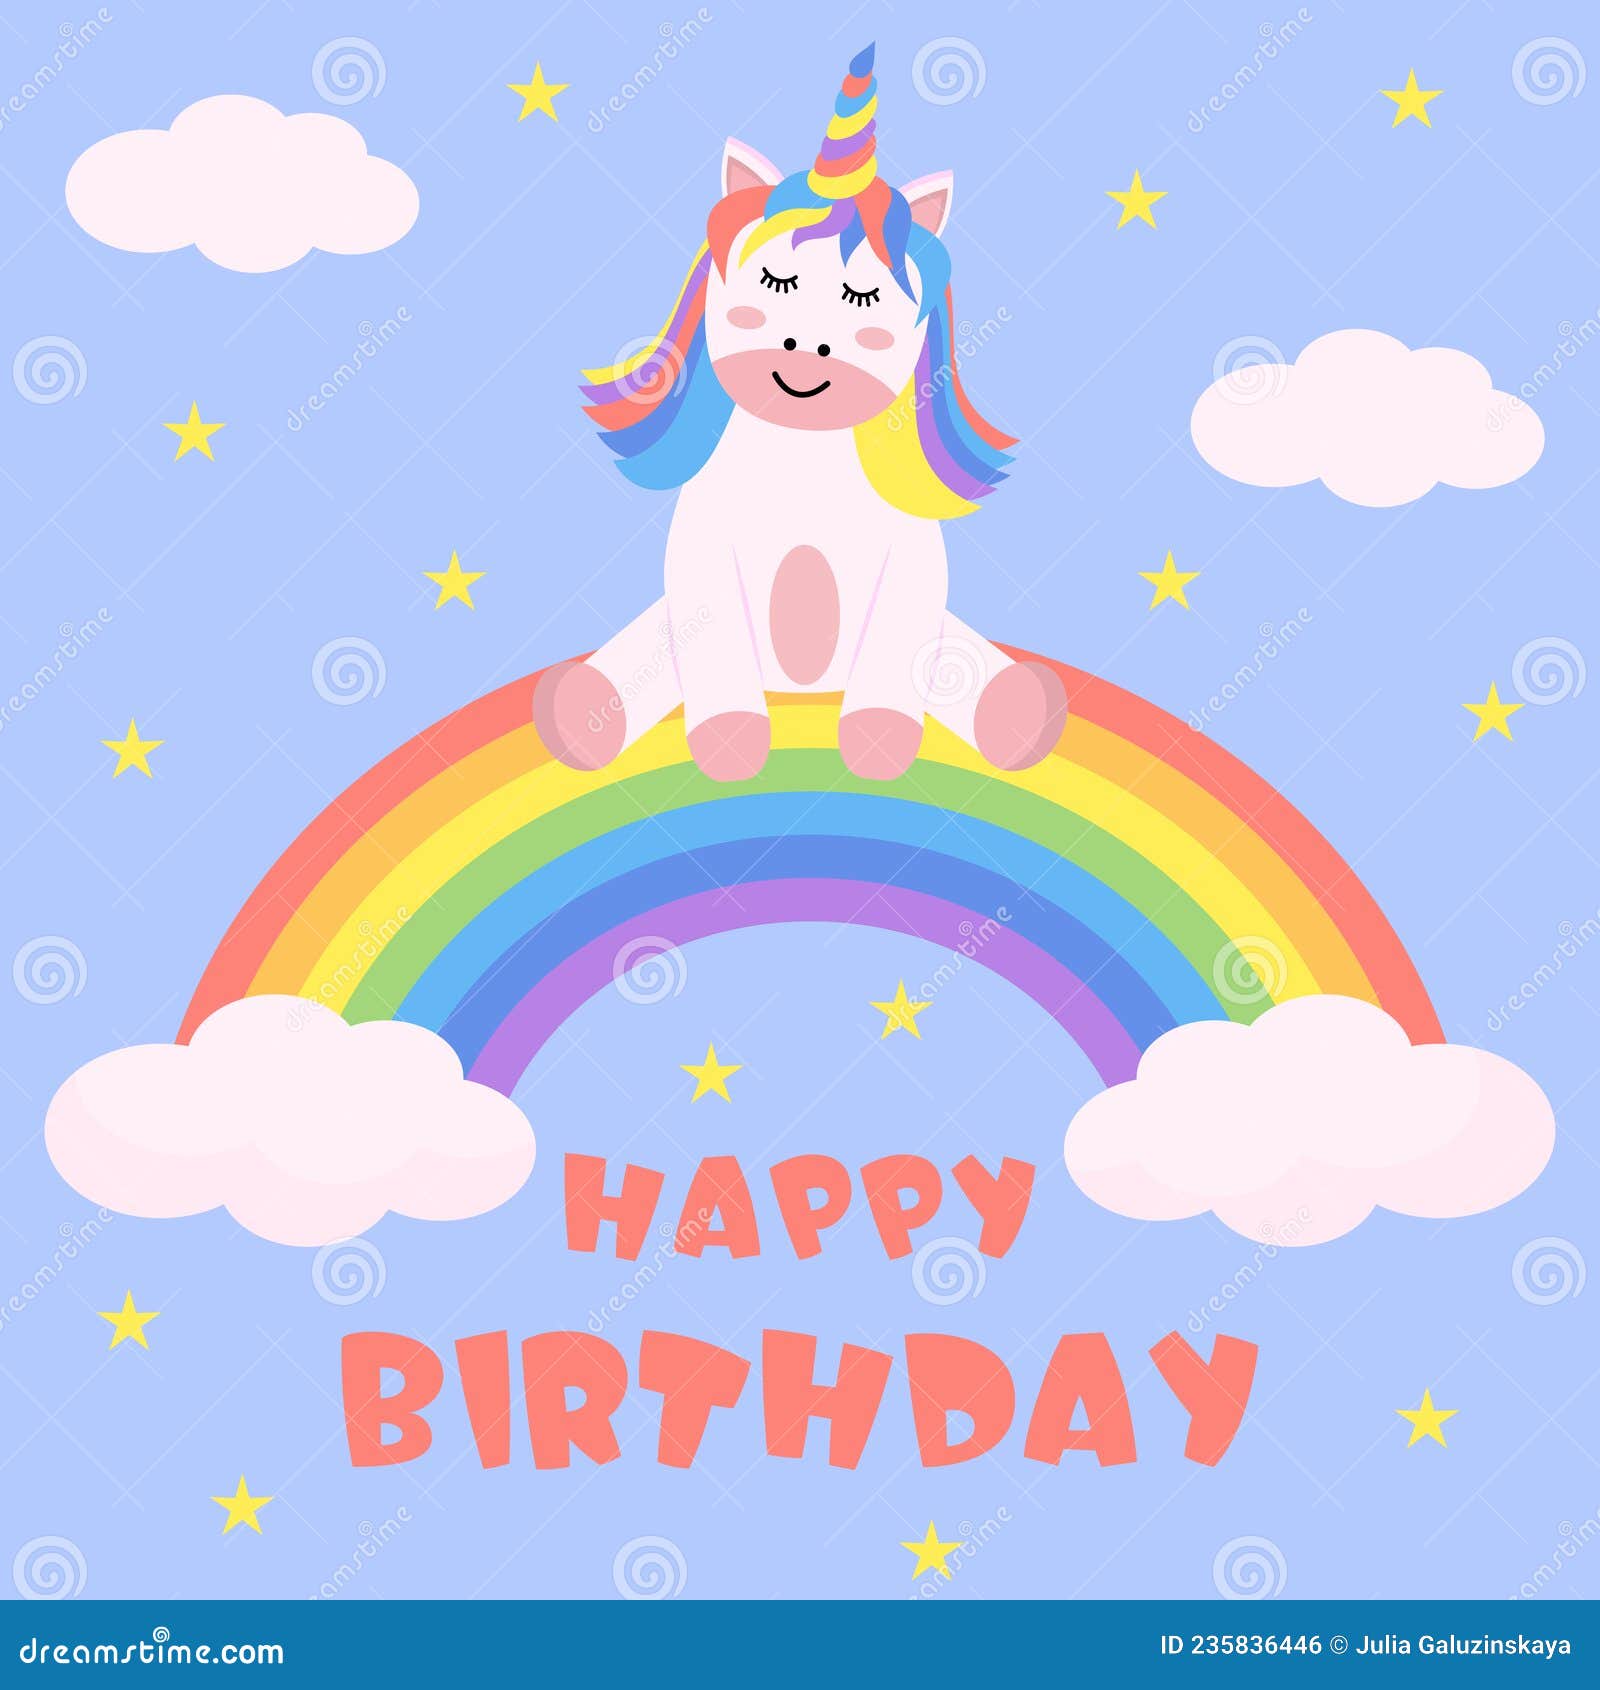 Happy Birthday Greeting Card with Unicorn Baby Sitting on the Rainbow ...